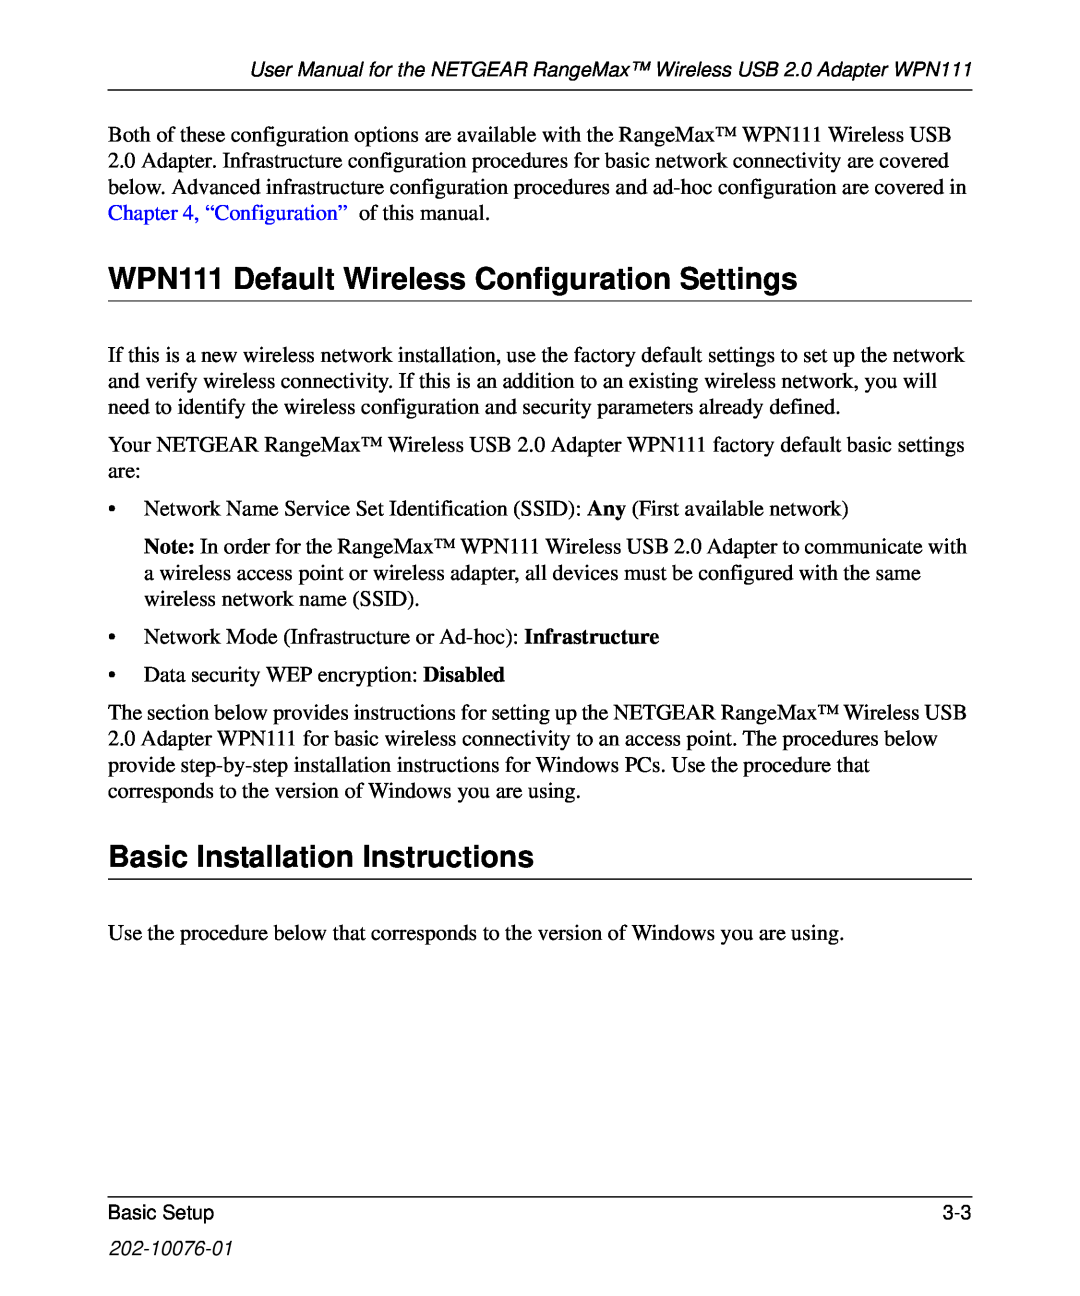 NETGEAR user manual WPN111 Default Wireless Configuration Settings, Basic Installation Instructions 